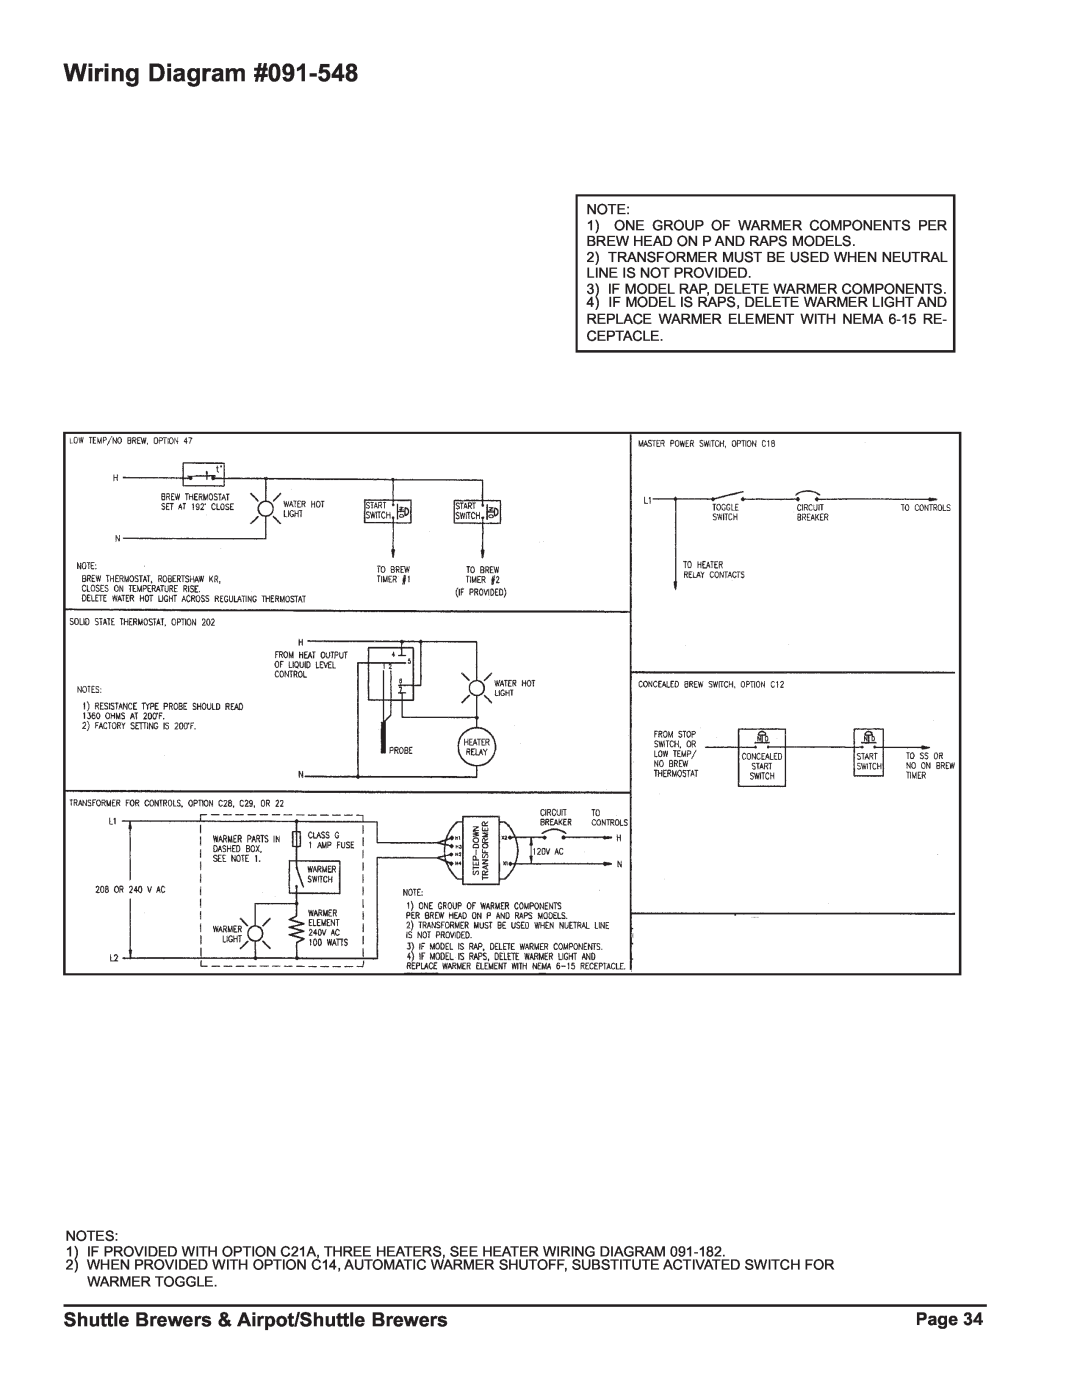 Grindmaster P400ESHP instruction manual Wiring Diagram #091-548, Shuttle Brewers & Airpot/Shuttle Brewers 